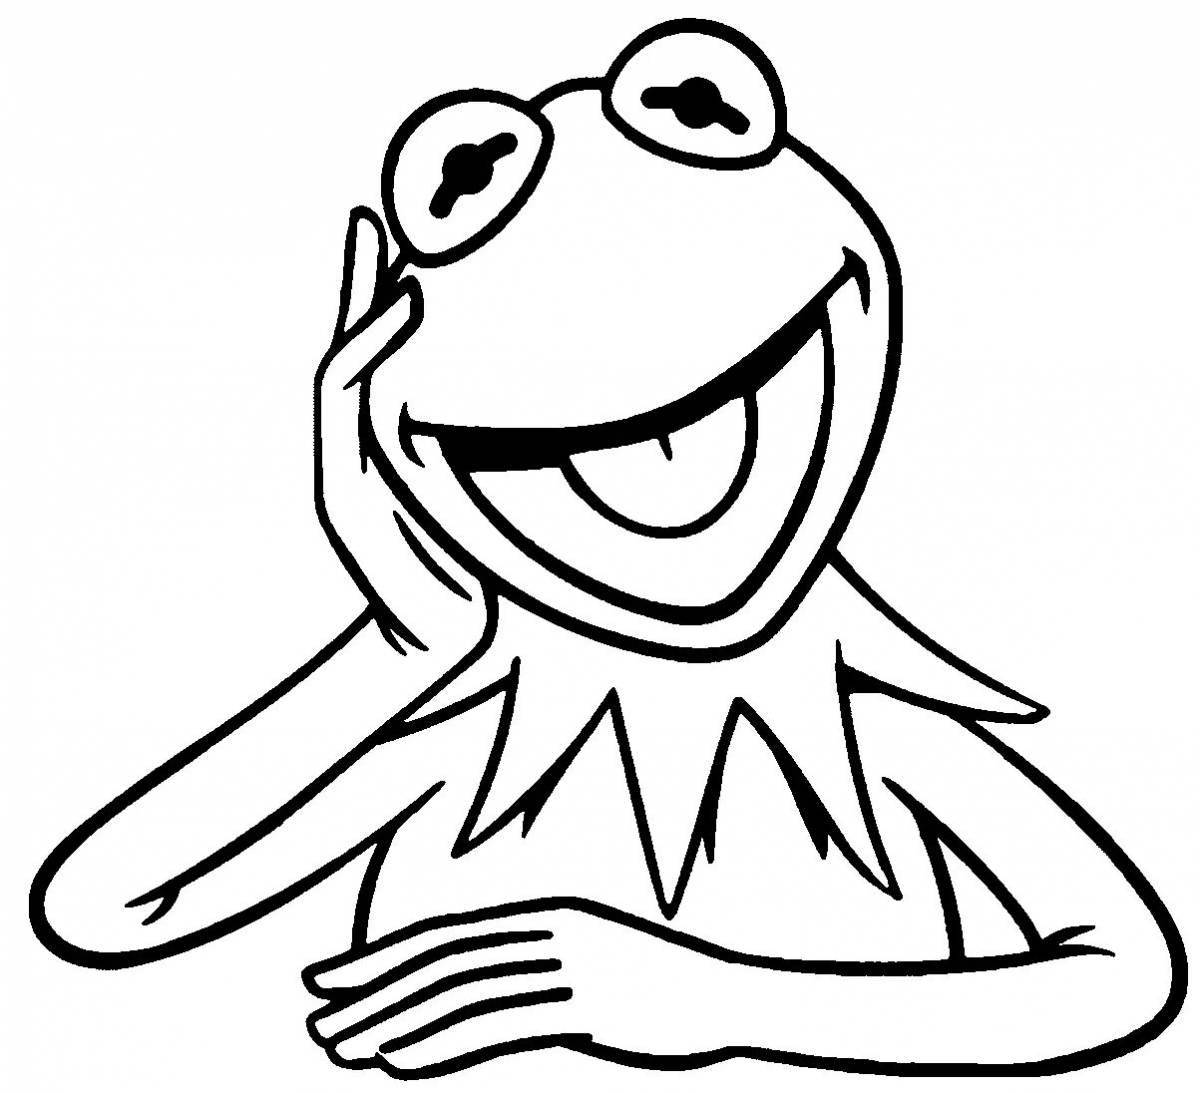 Pepe the frog #2